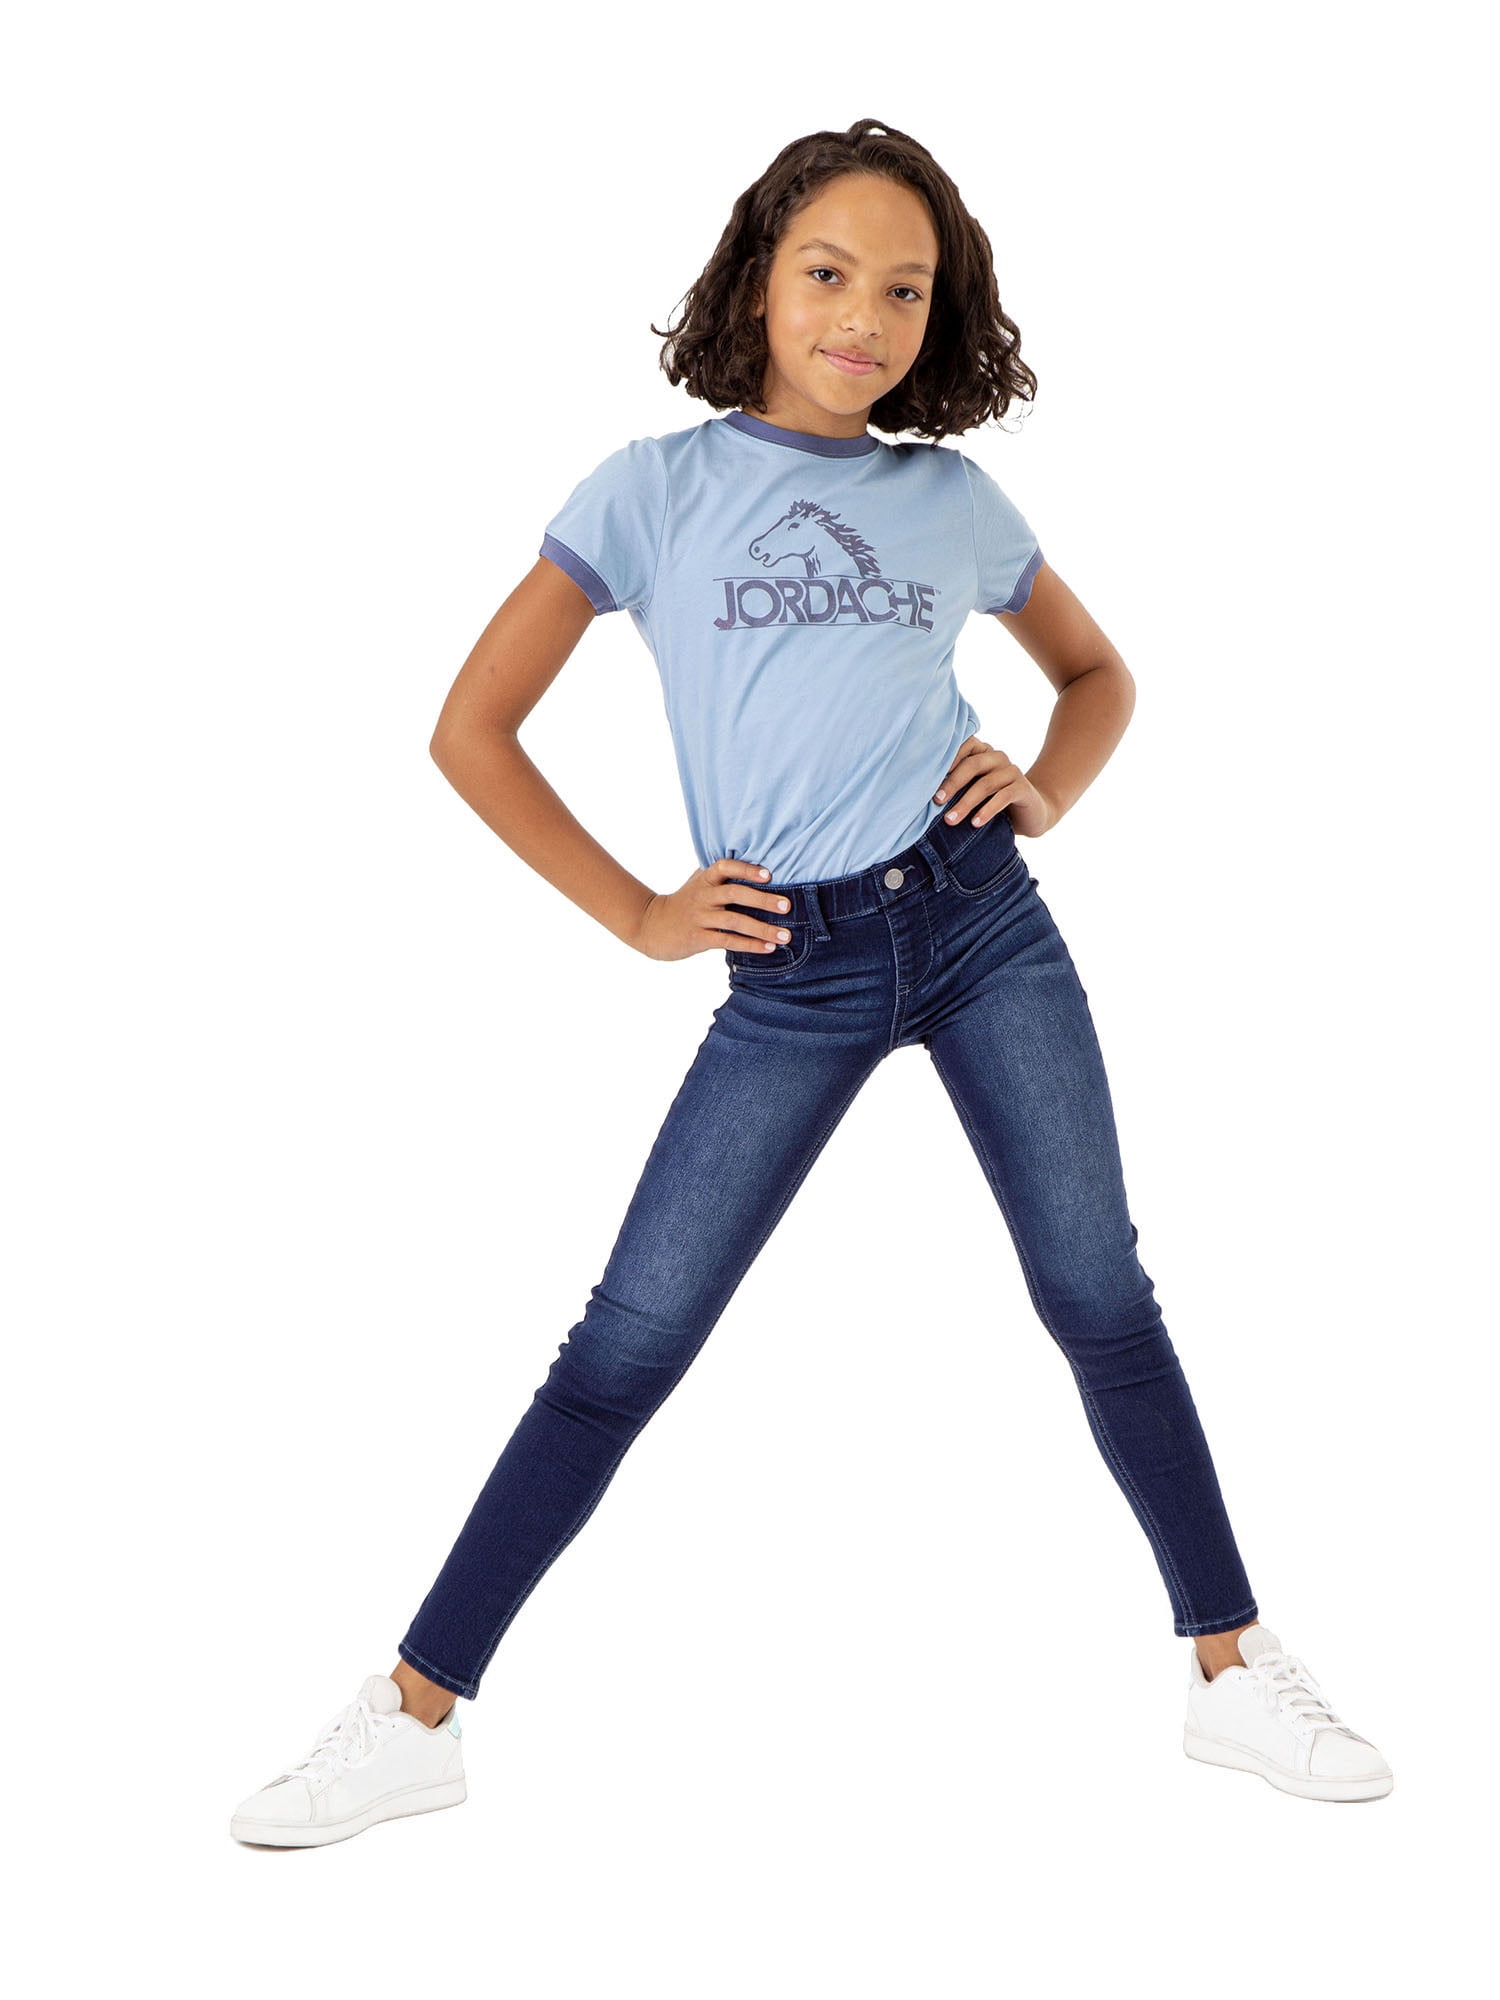 Jordache Girls Jeans, Sizes 4-18 & Plus -